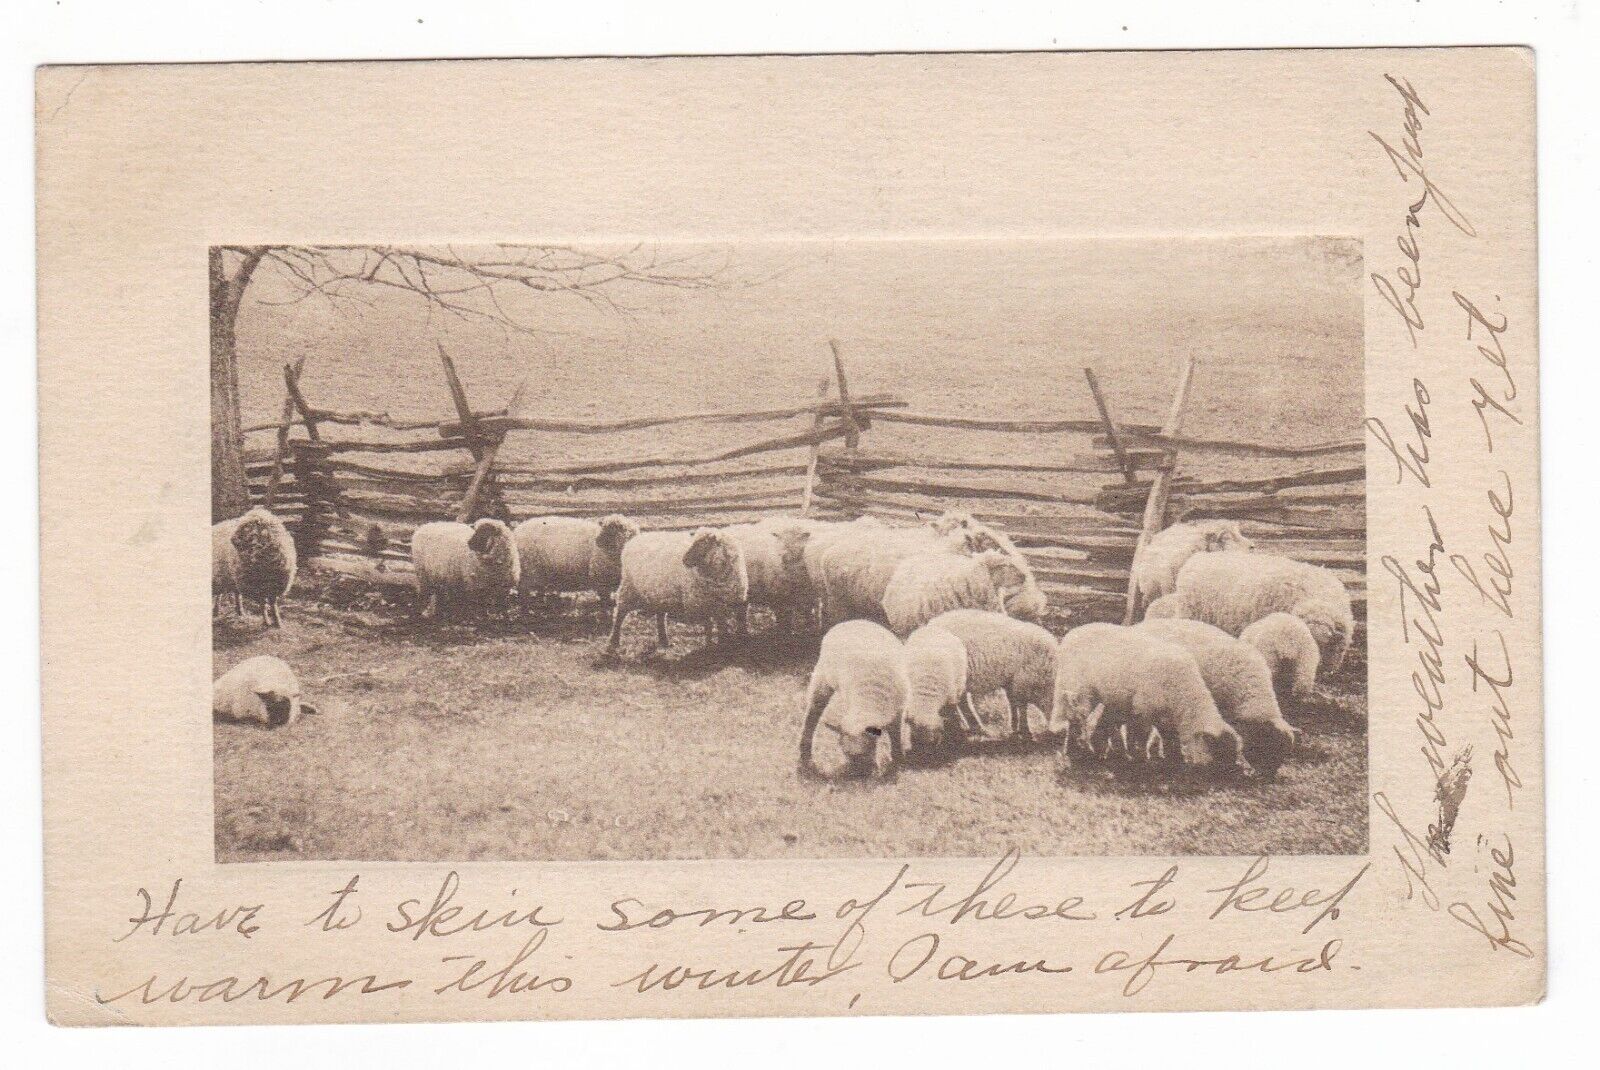 c1910 DRISCOLL NORTH DAKOTA SHEEP WOOD FENCE VINTAGE B&W POSTCARD ND HOHMAN OLD